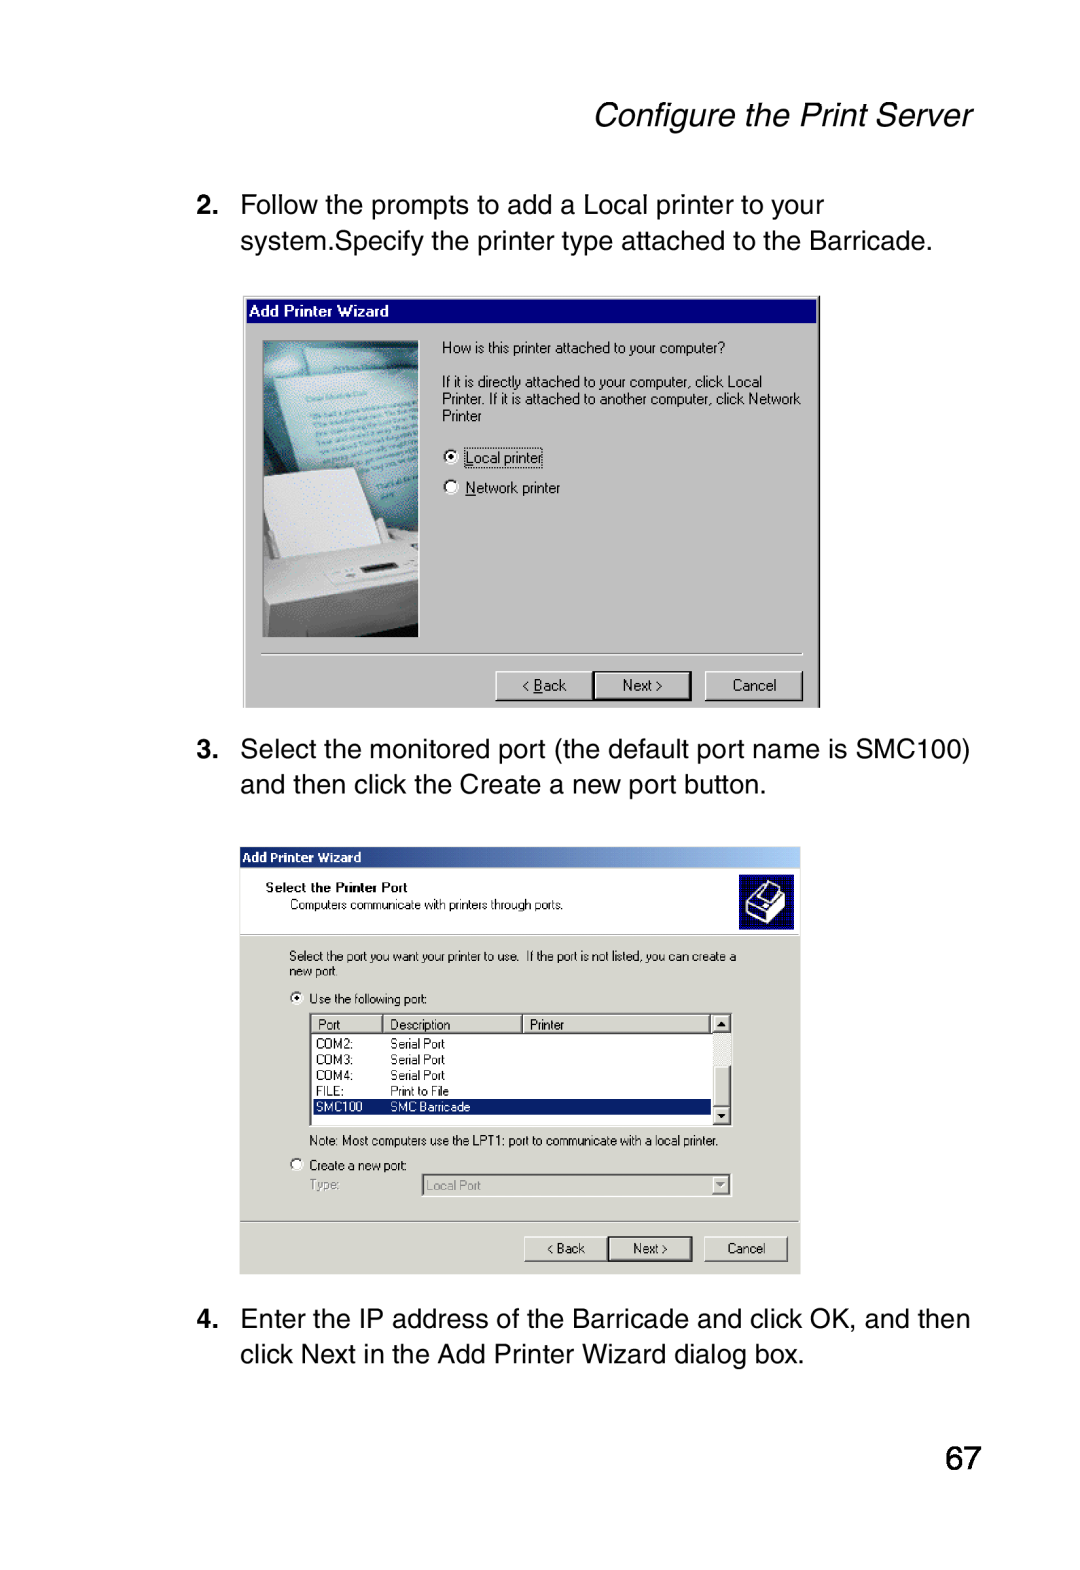 Sharp S M C 7 0 0 4 A B R, SMC7004ABR manual Configure the Print Server 